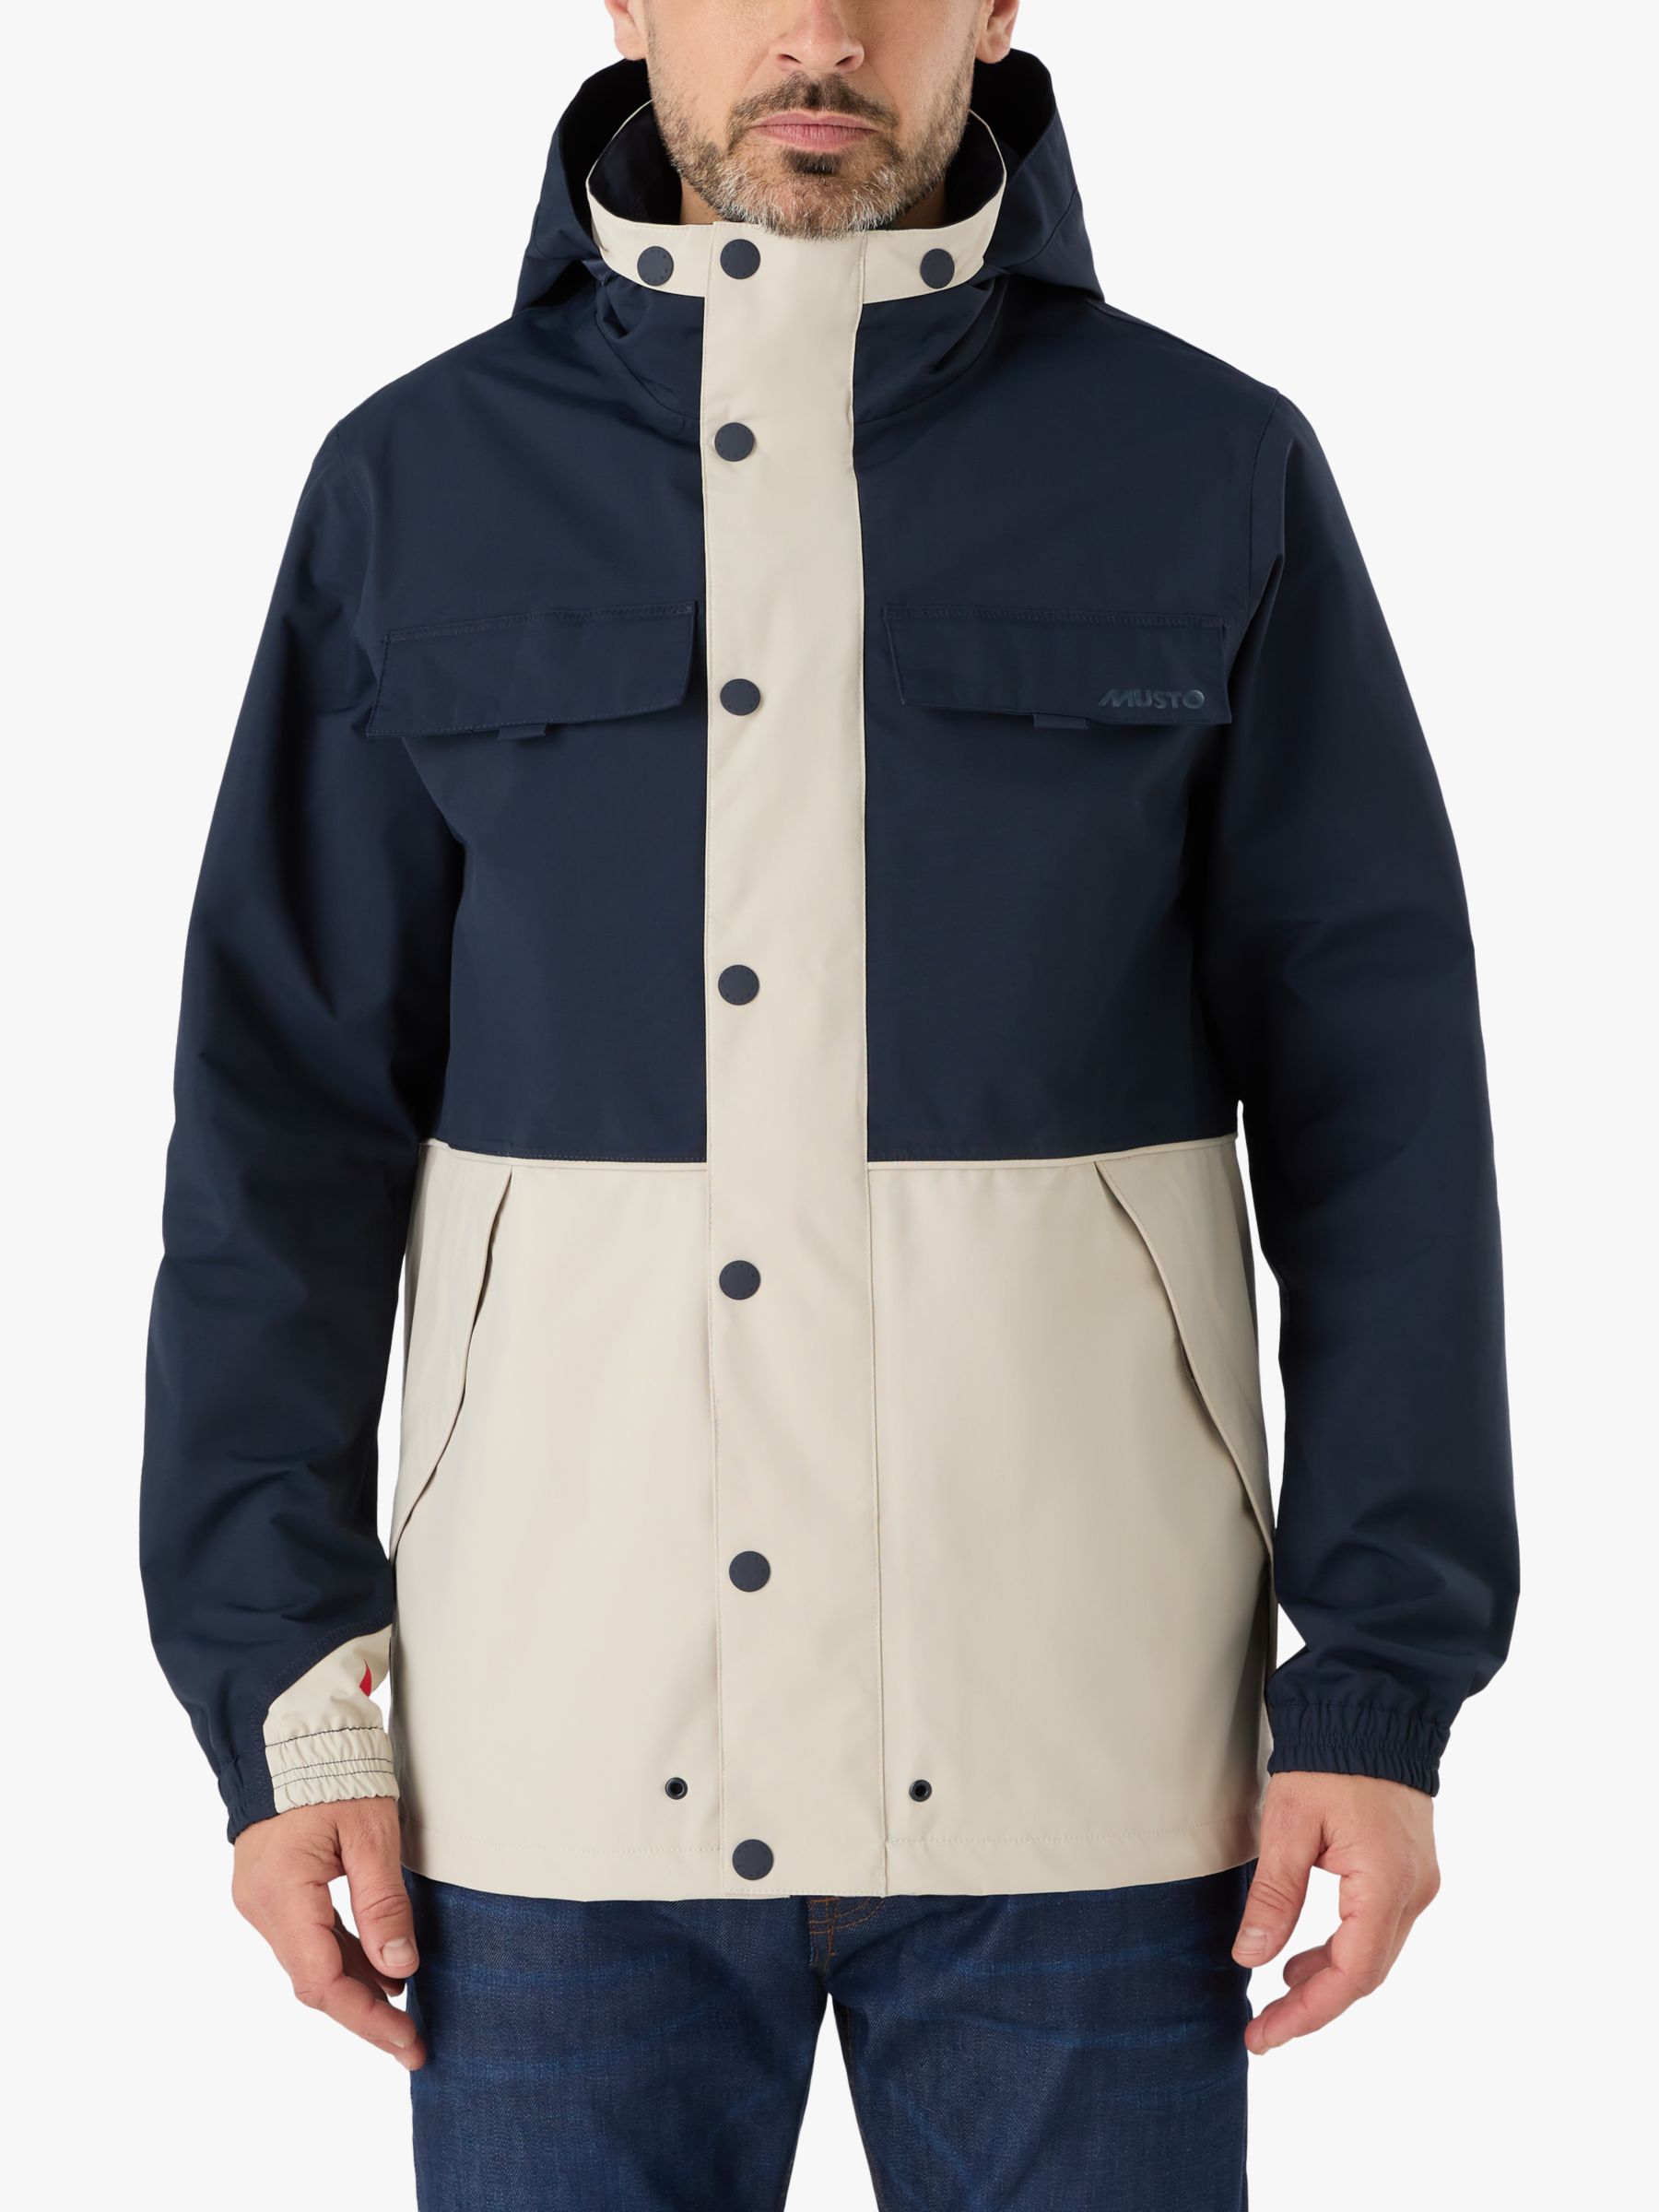 Musto BRI Classic Waterproof Jacket, Pumice/Navy, M